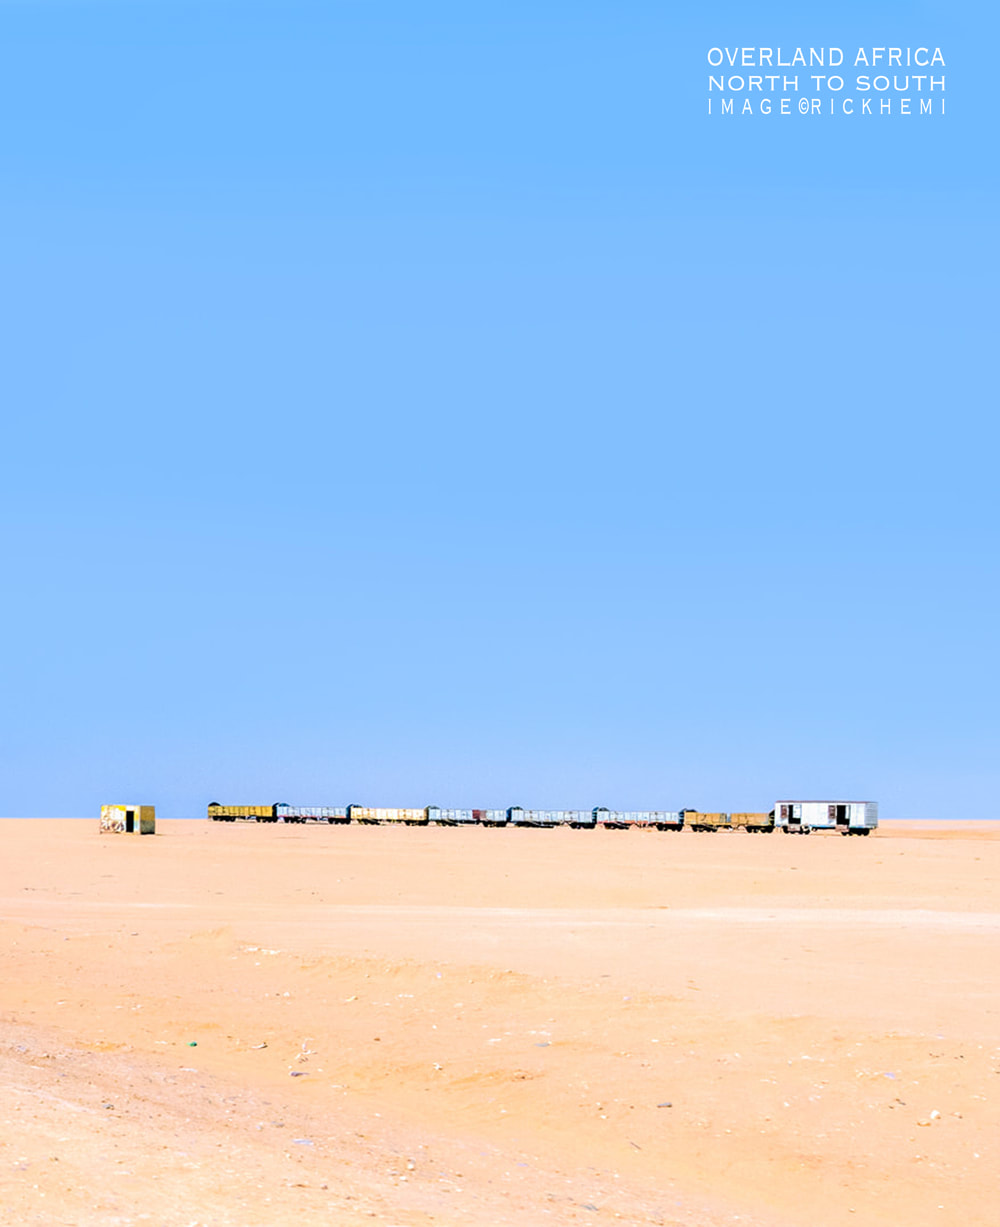 solo overland travel northern Africa, DSLR desert roadside snap, image by Rick Hemi